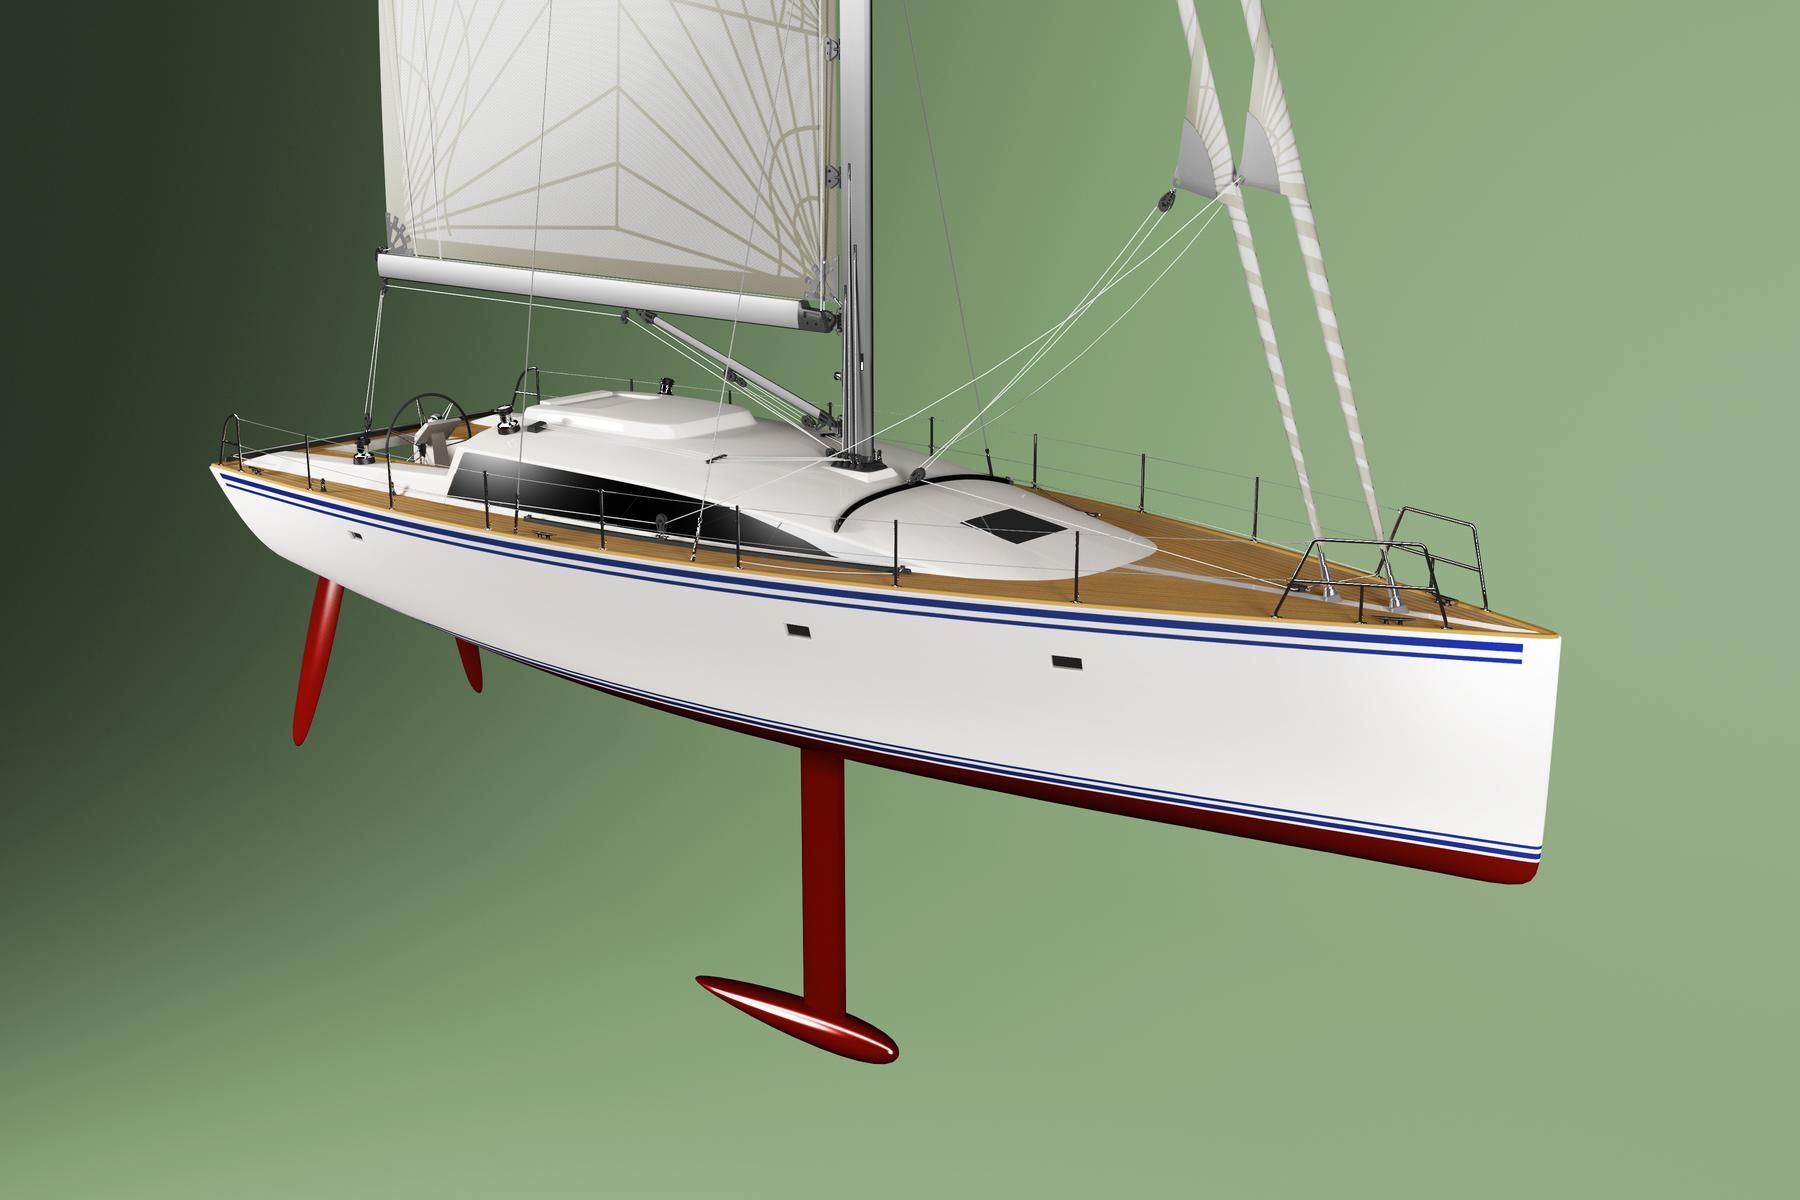 40 feet sailboat